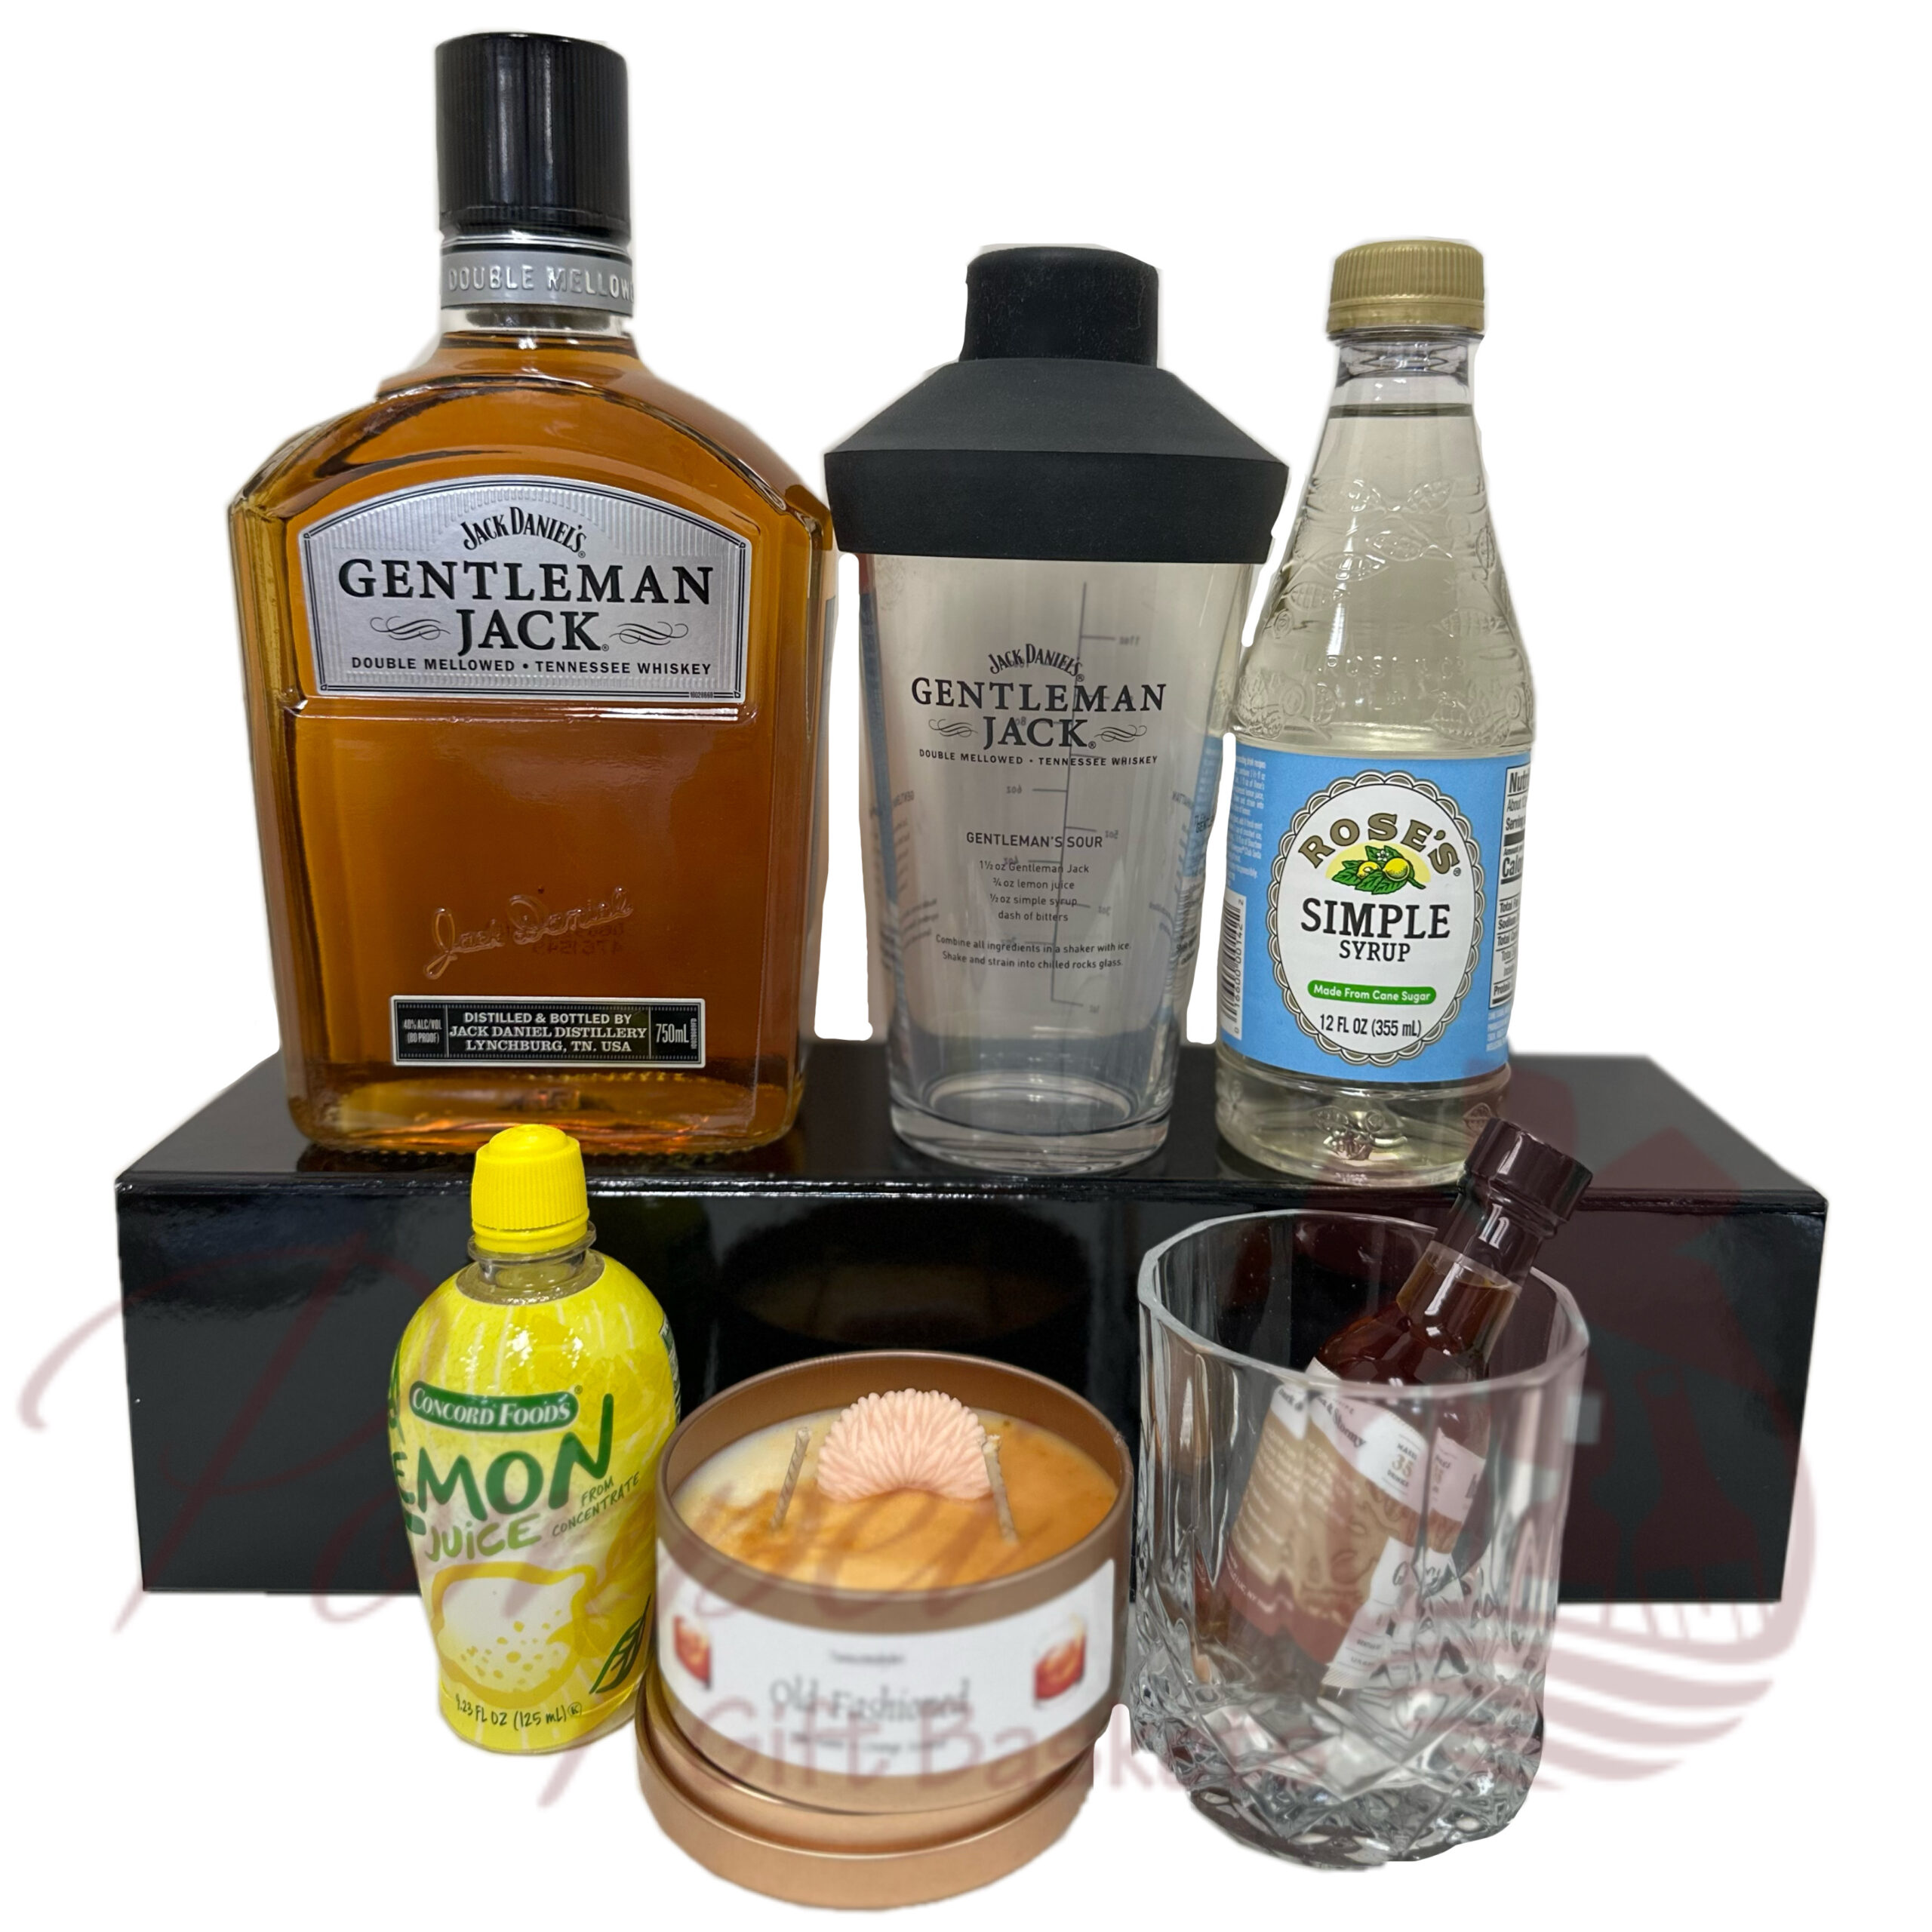 Gentleman Jack Whiskey Sour Cocktail Mixer